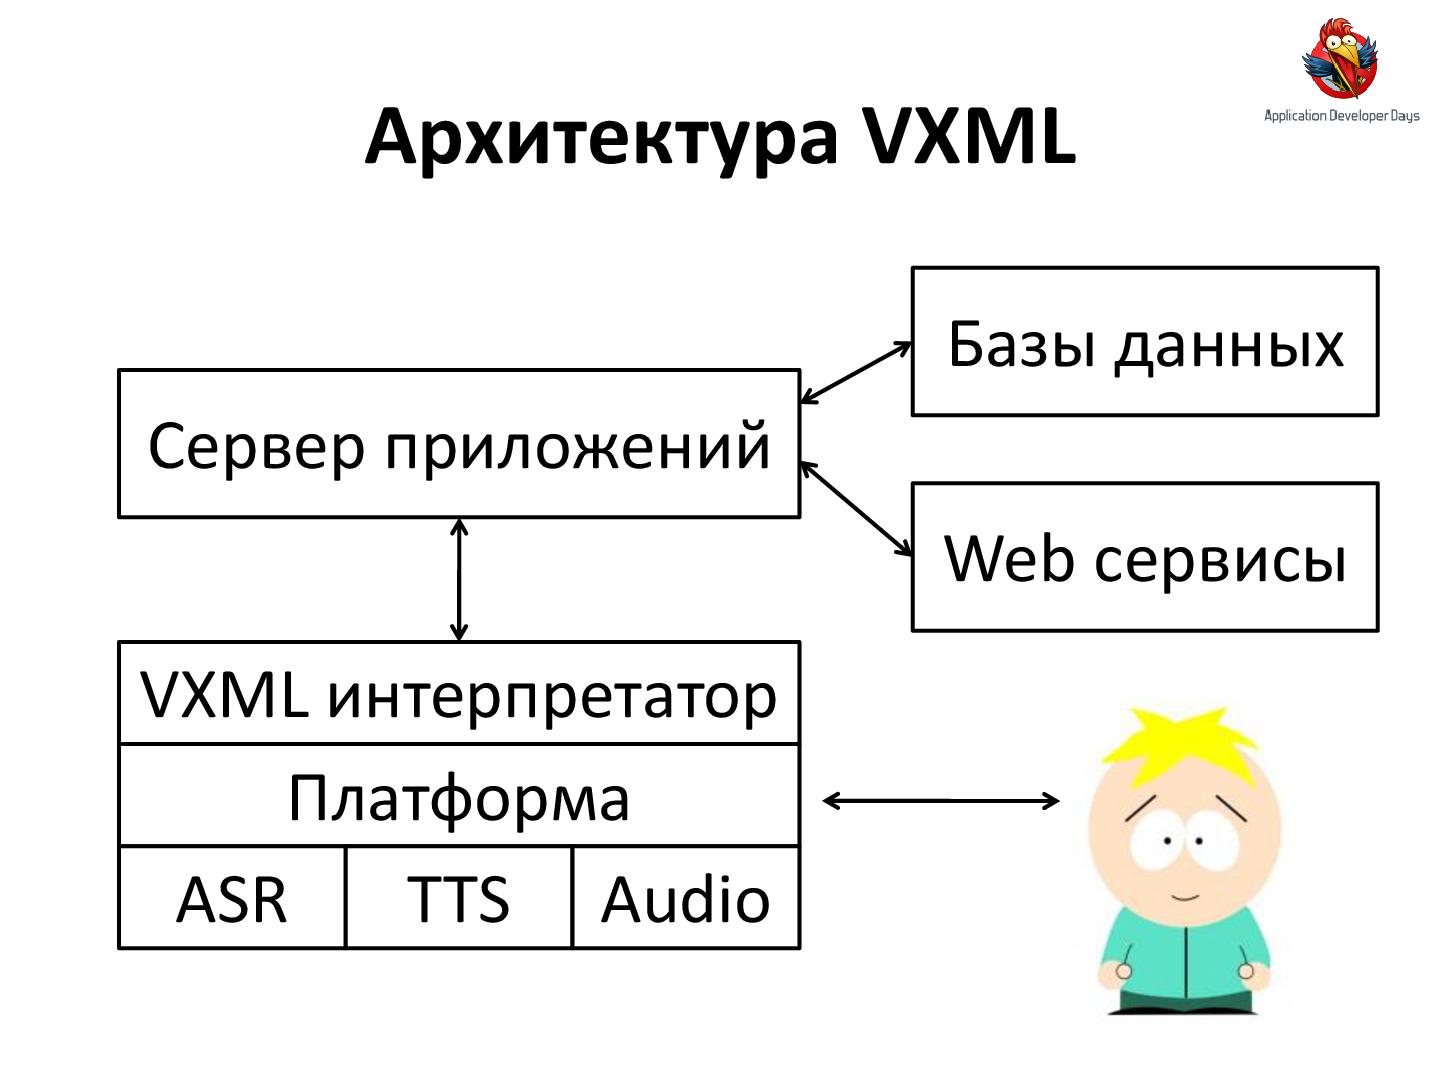 Файл:VoiceXML.Теория и практика проектирования голосовых приложений (Александр Ворон, ADD-2012).pdf